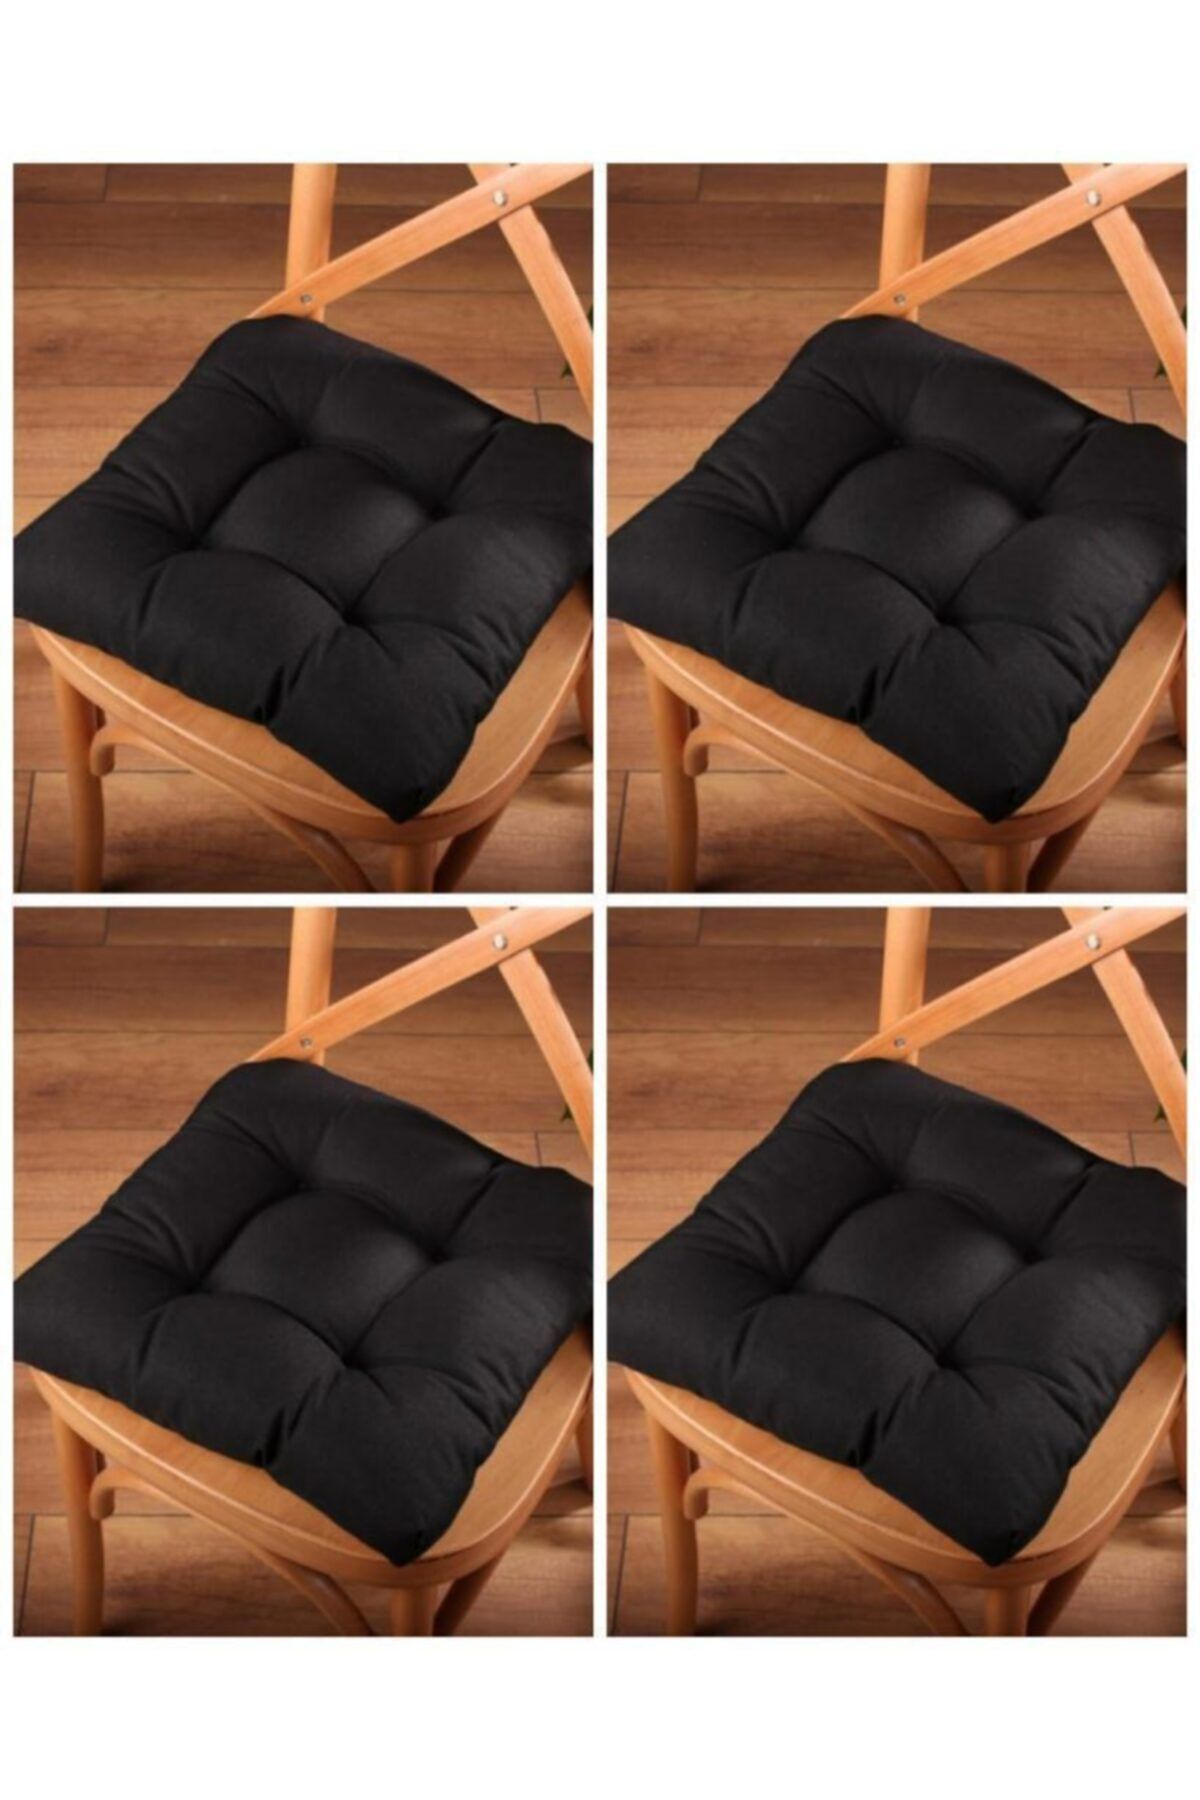 ALTINPAMUK 4'lü Gold Lüx Pofidik Siyah Sandalye Minderi Özel Dikişli Bağcıklı 40x40cm